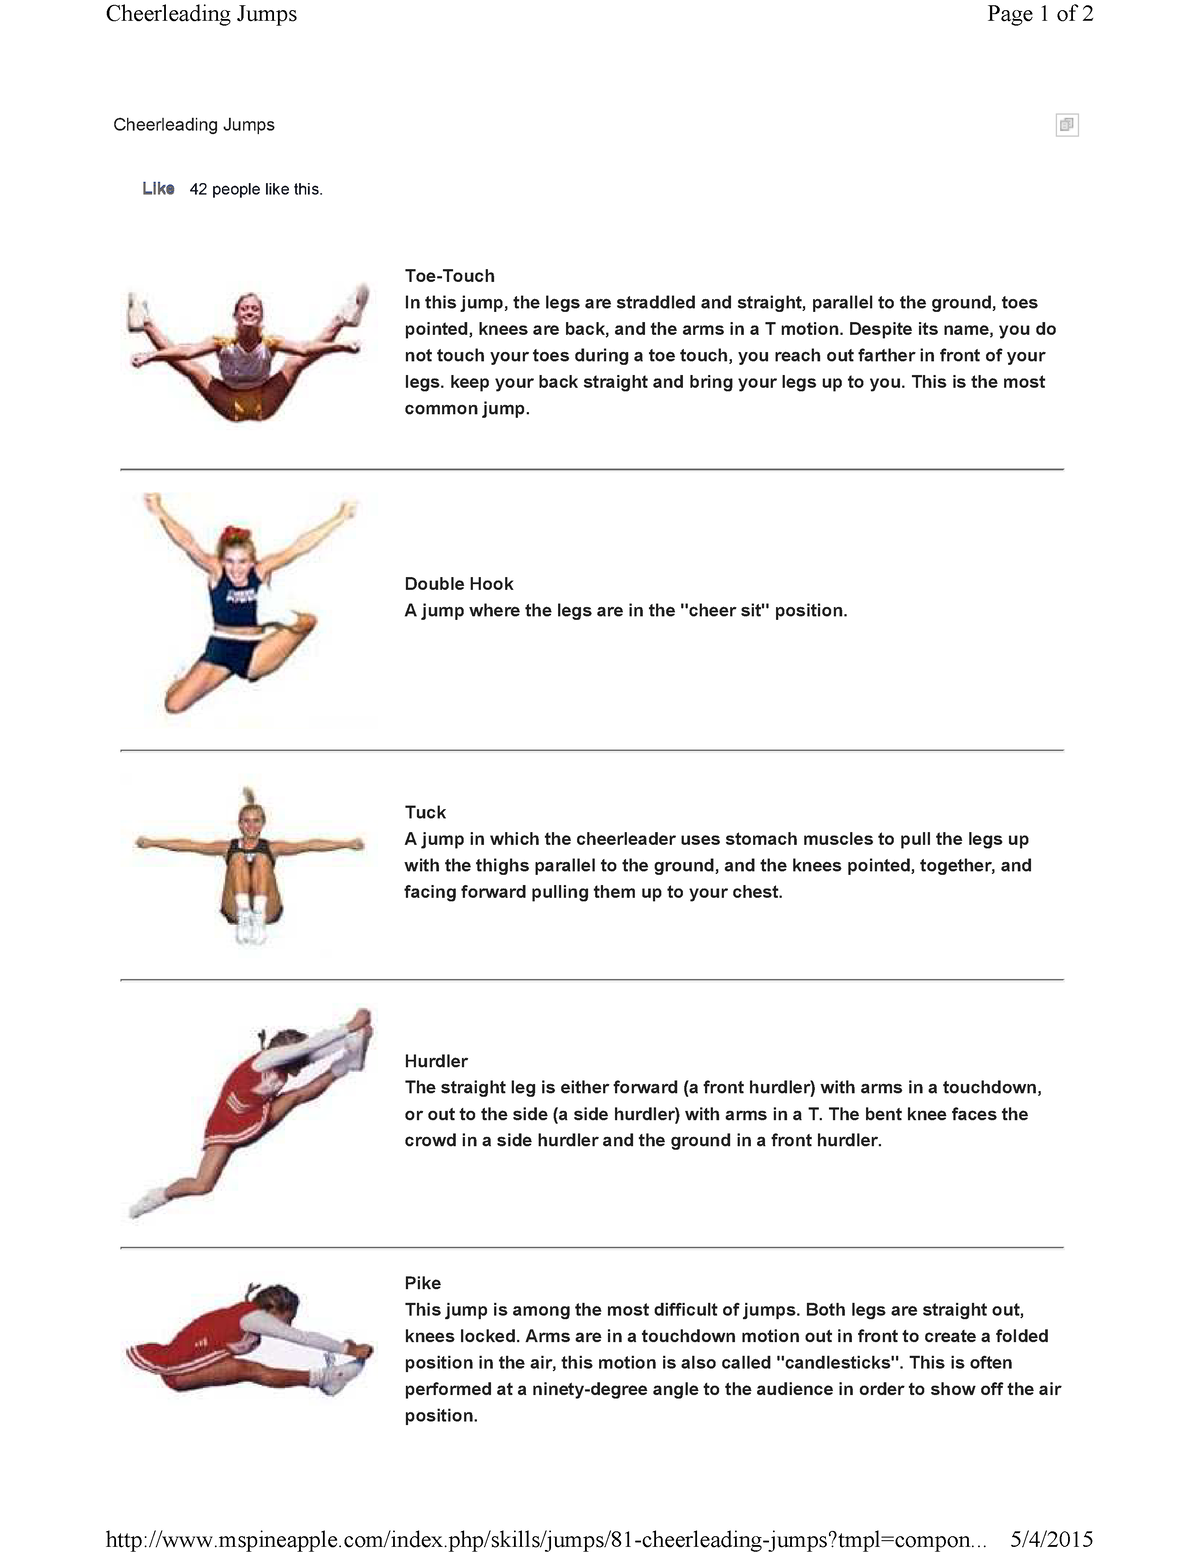 basic cheerleading moves